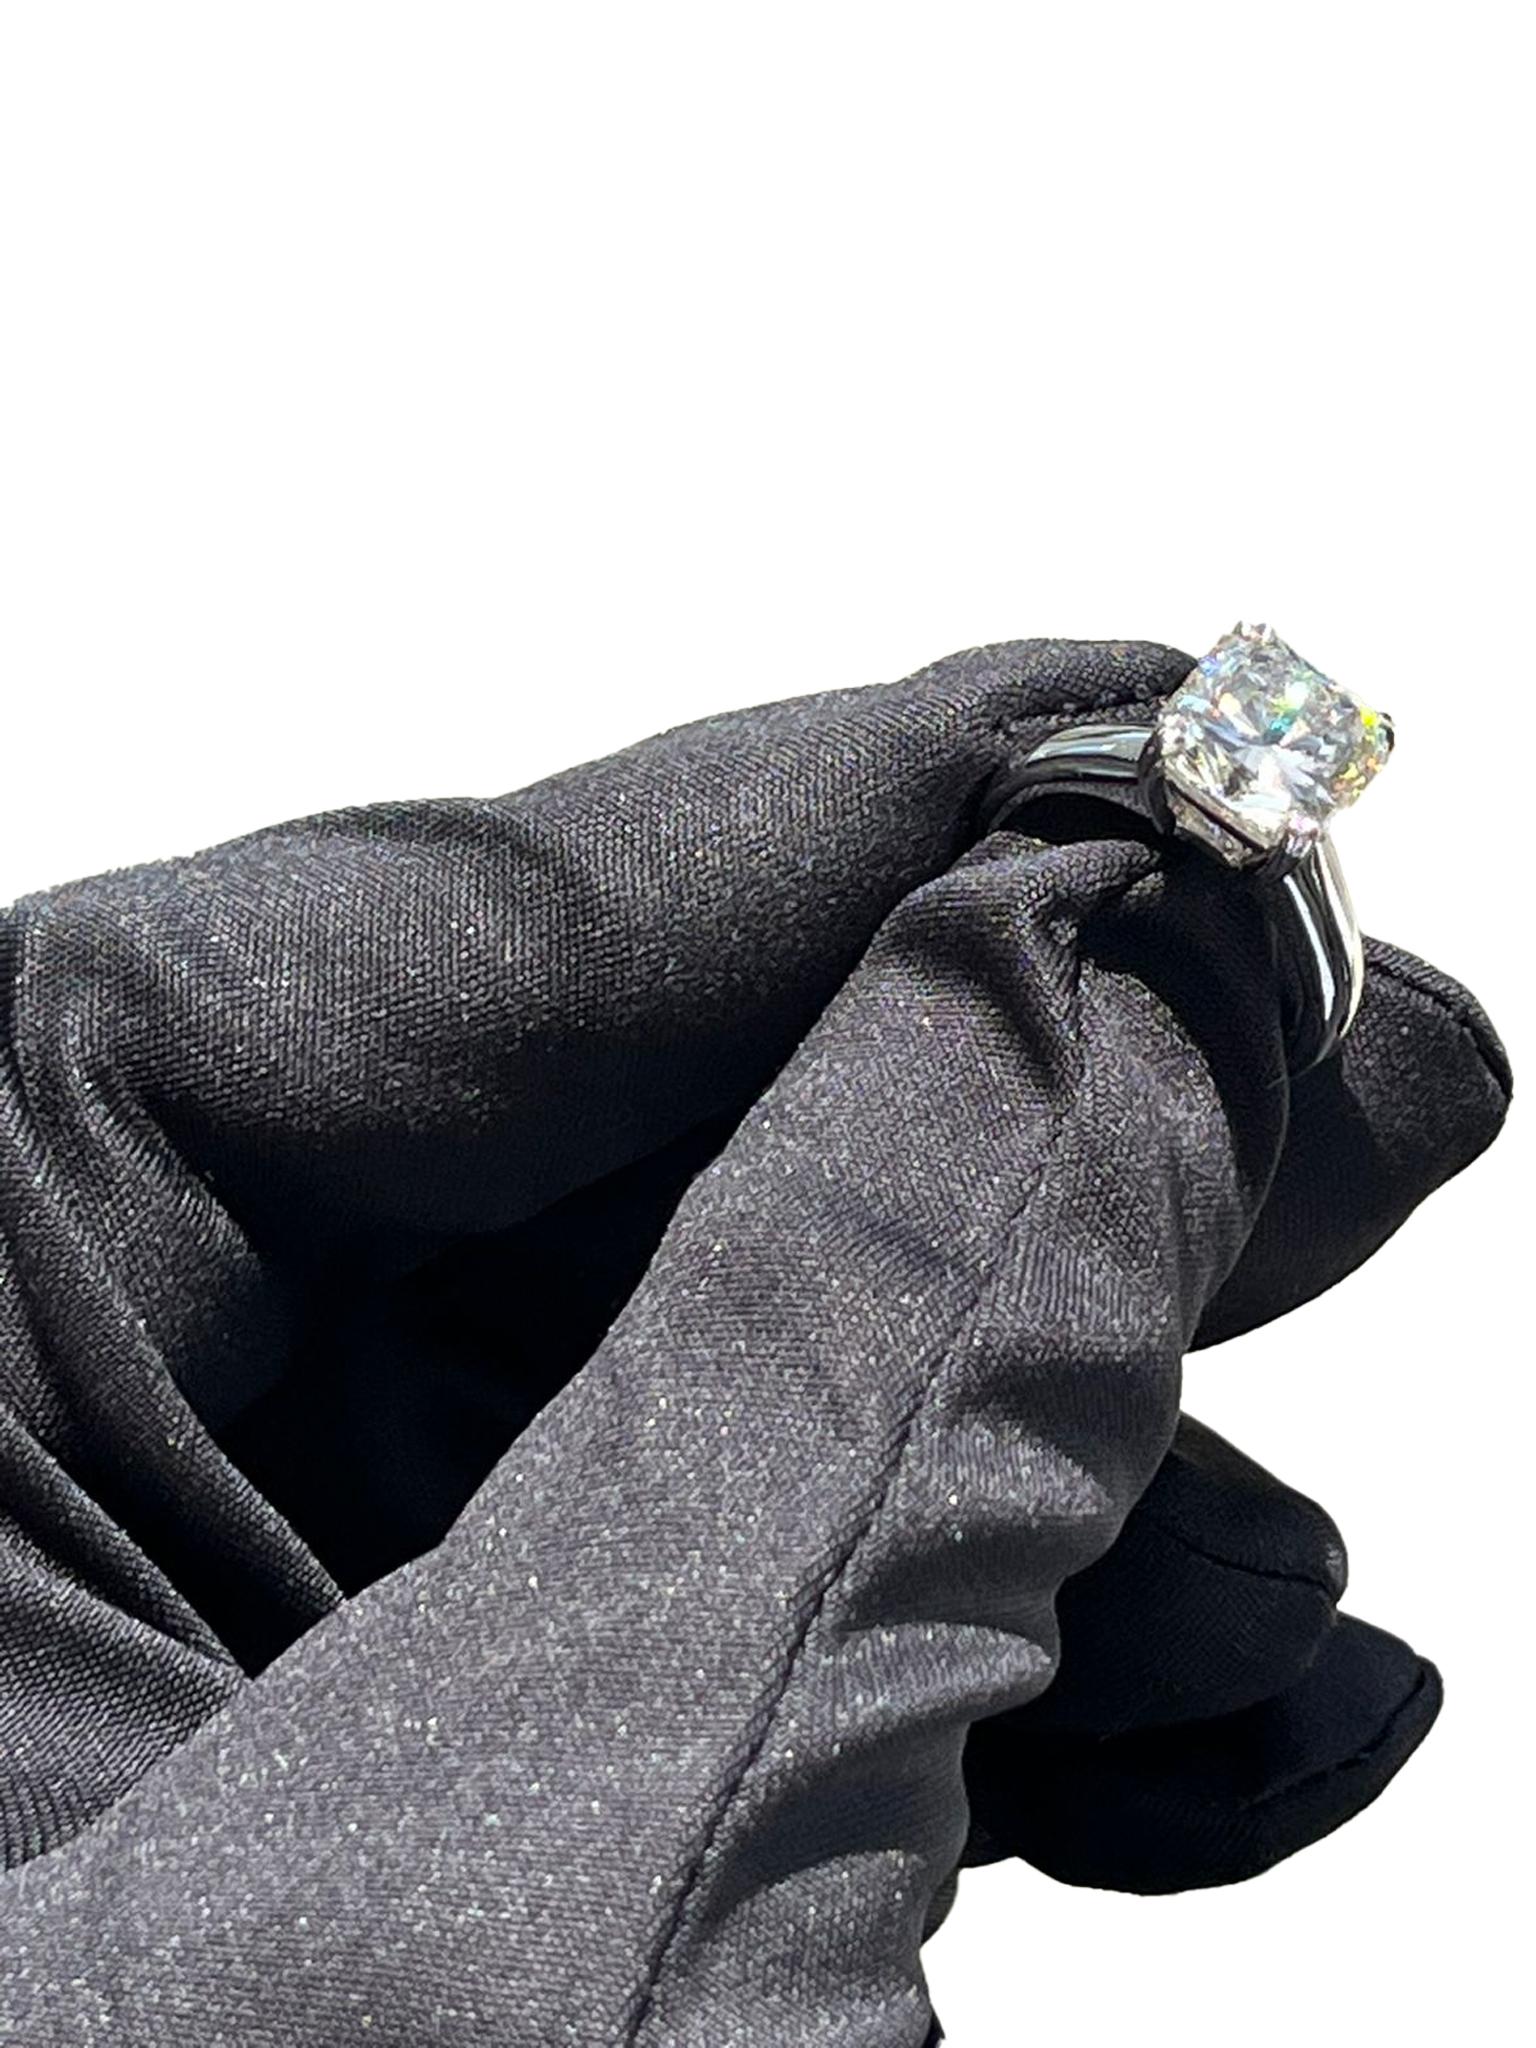 4.28 Carat Natural Square Radiant Cut Diamond Engagement Ring in Platinum For Sale 11